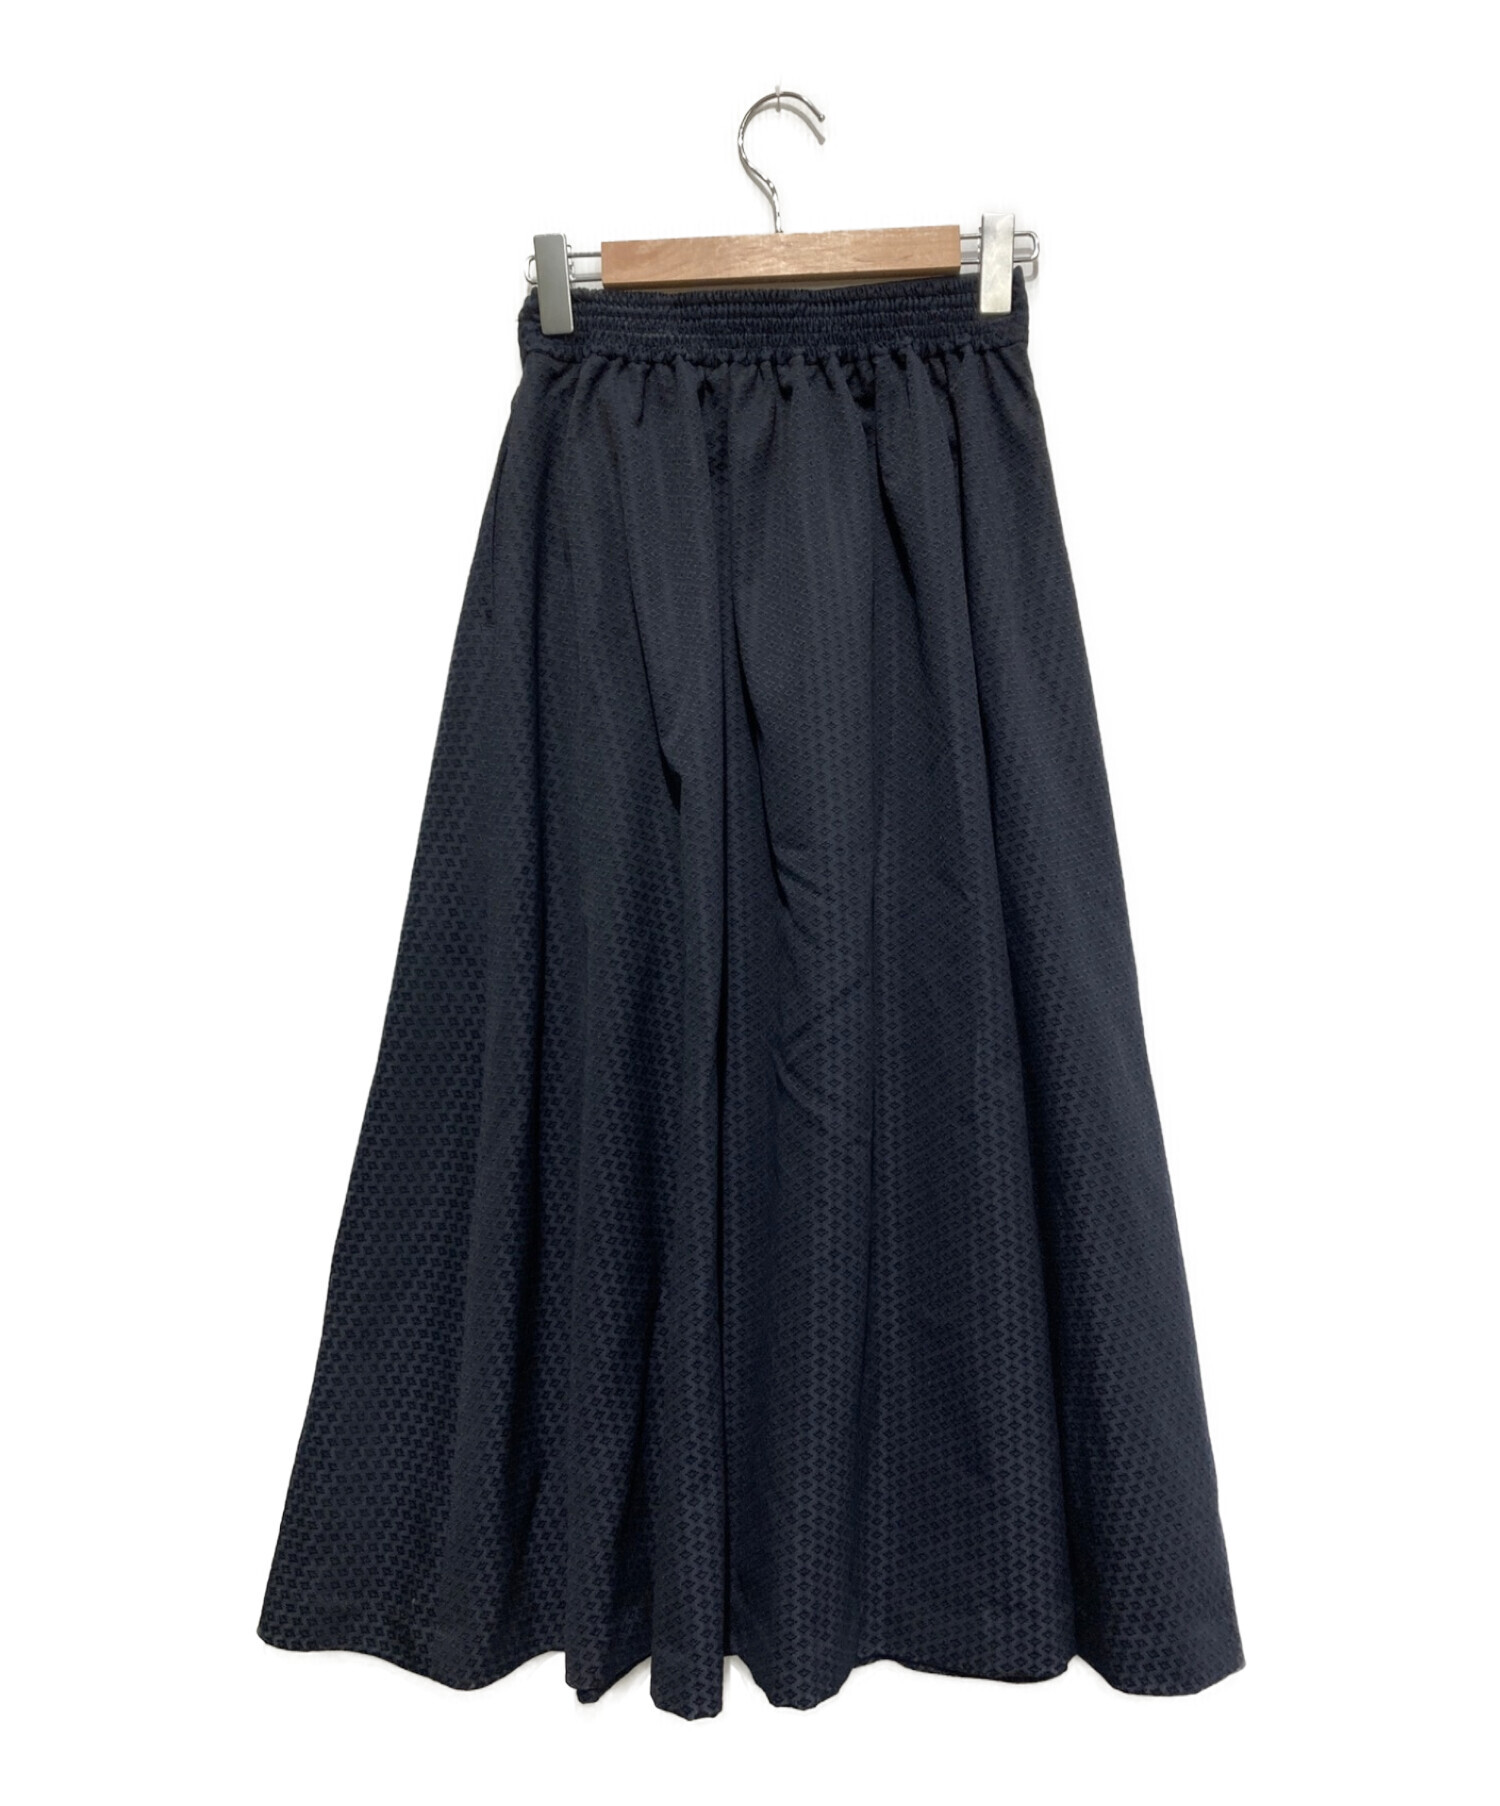 COEL MA-1スカート ネイビー - スカート